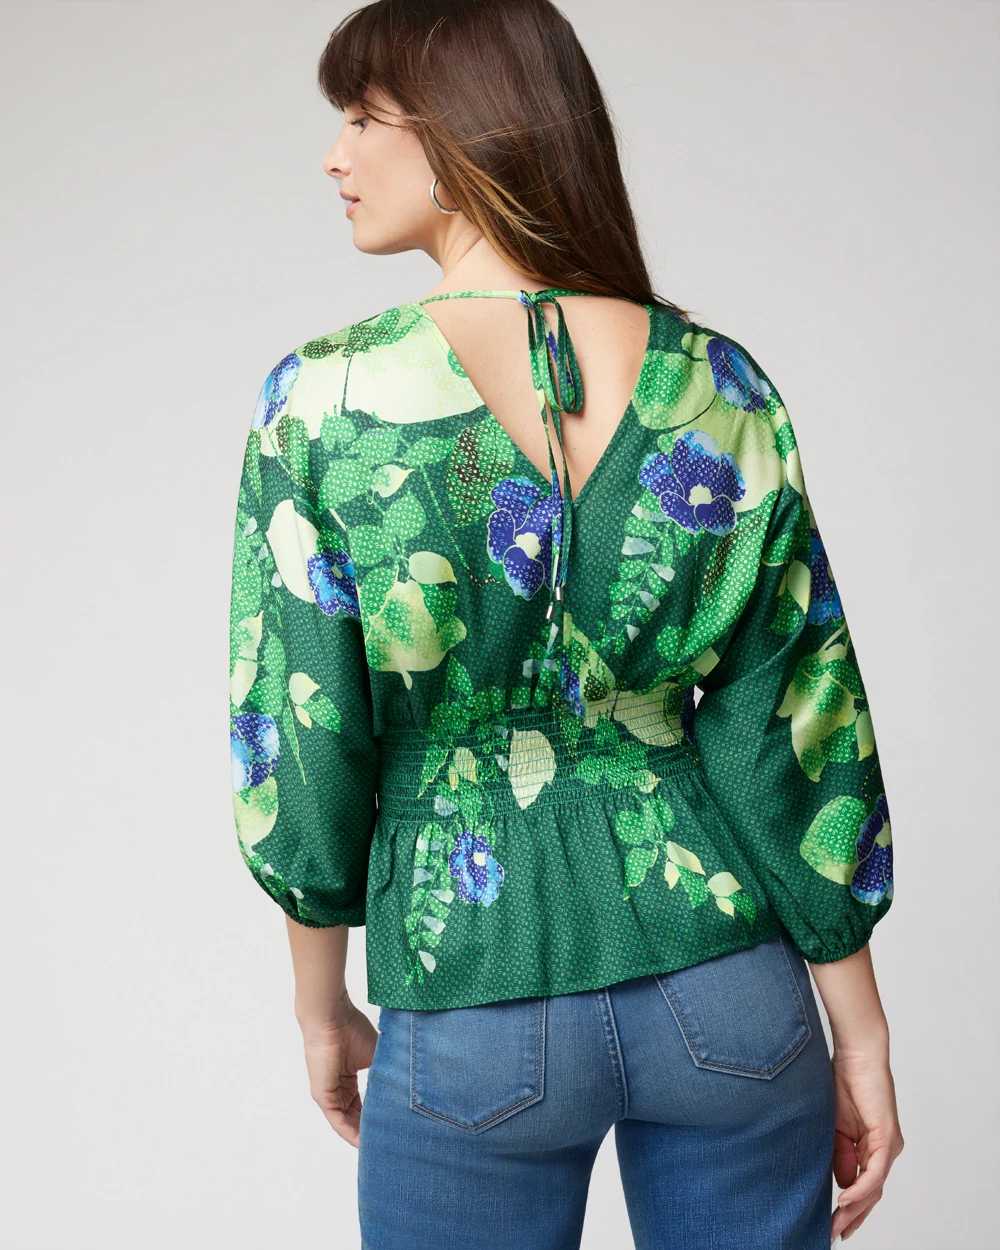 Smocked Waist Kimono Sleeve Blouse click to view larger image.